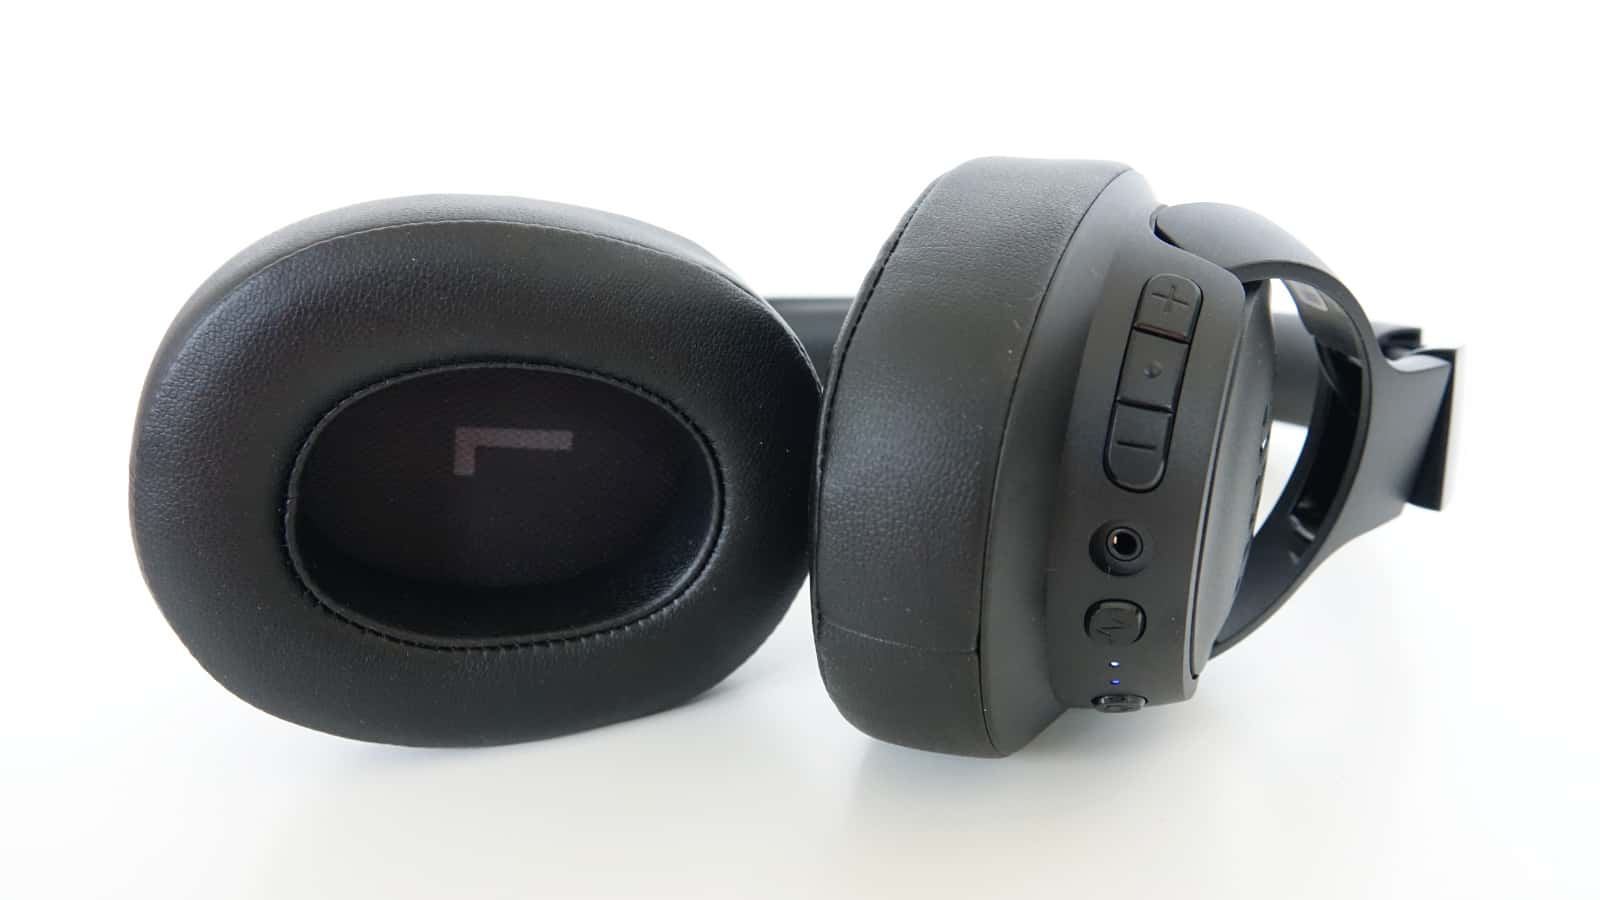 Best Wireless Headphones: JBL Tune 760NC Review